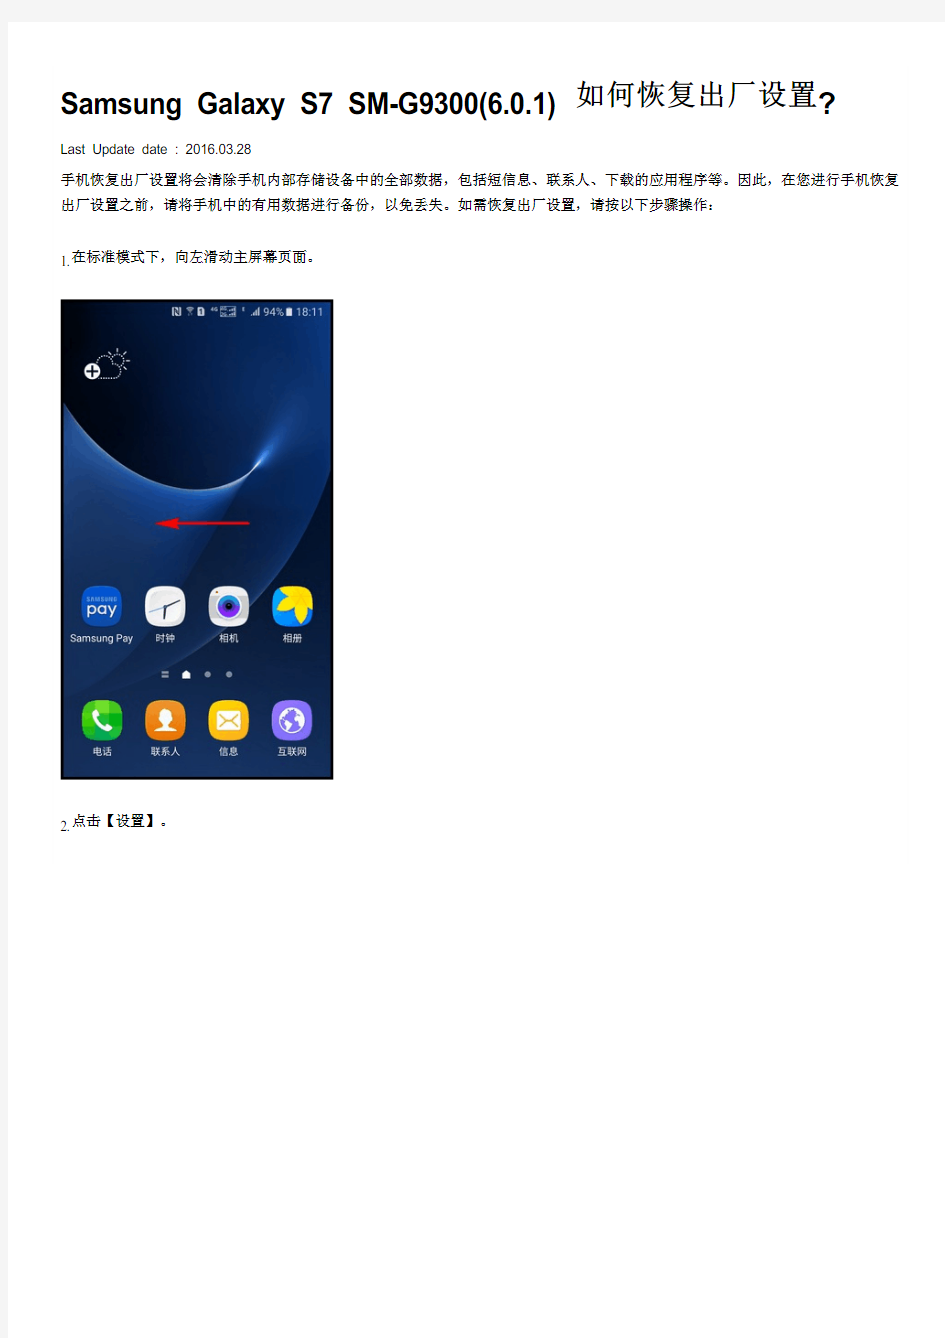 Samsung Galaxy S7 SM-G9300(6.0.1)如何恢复出厂设置